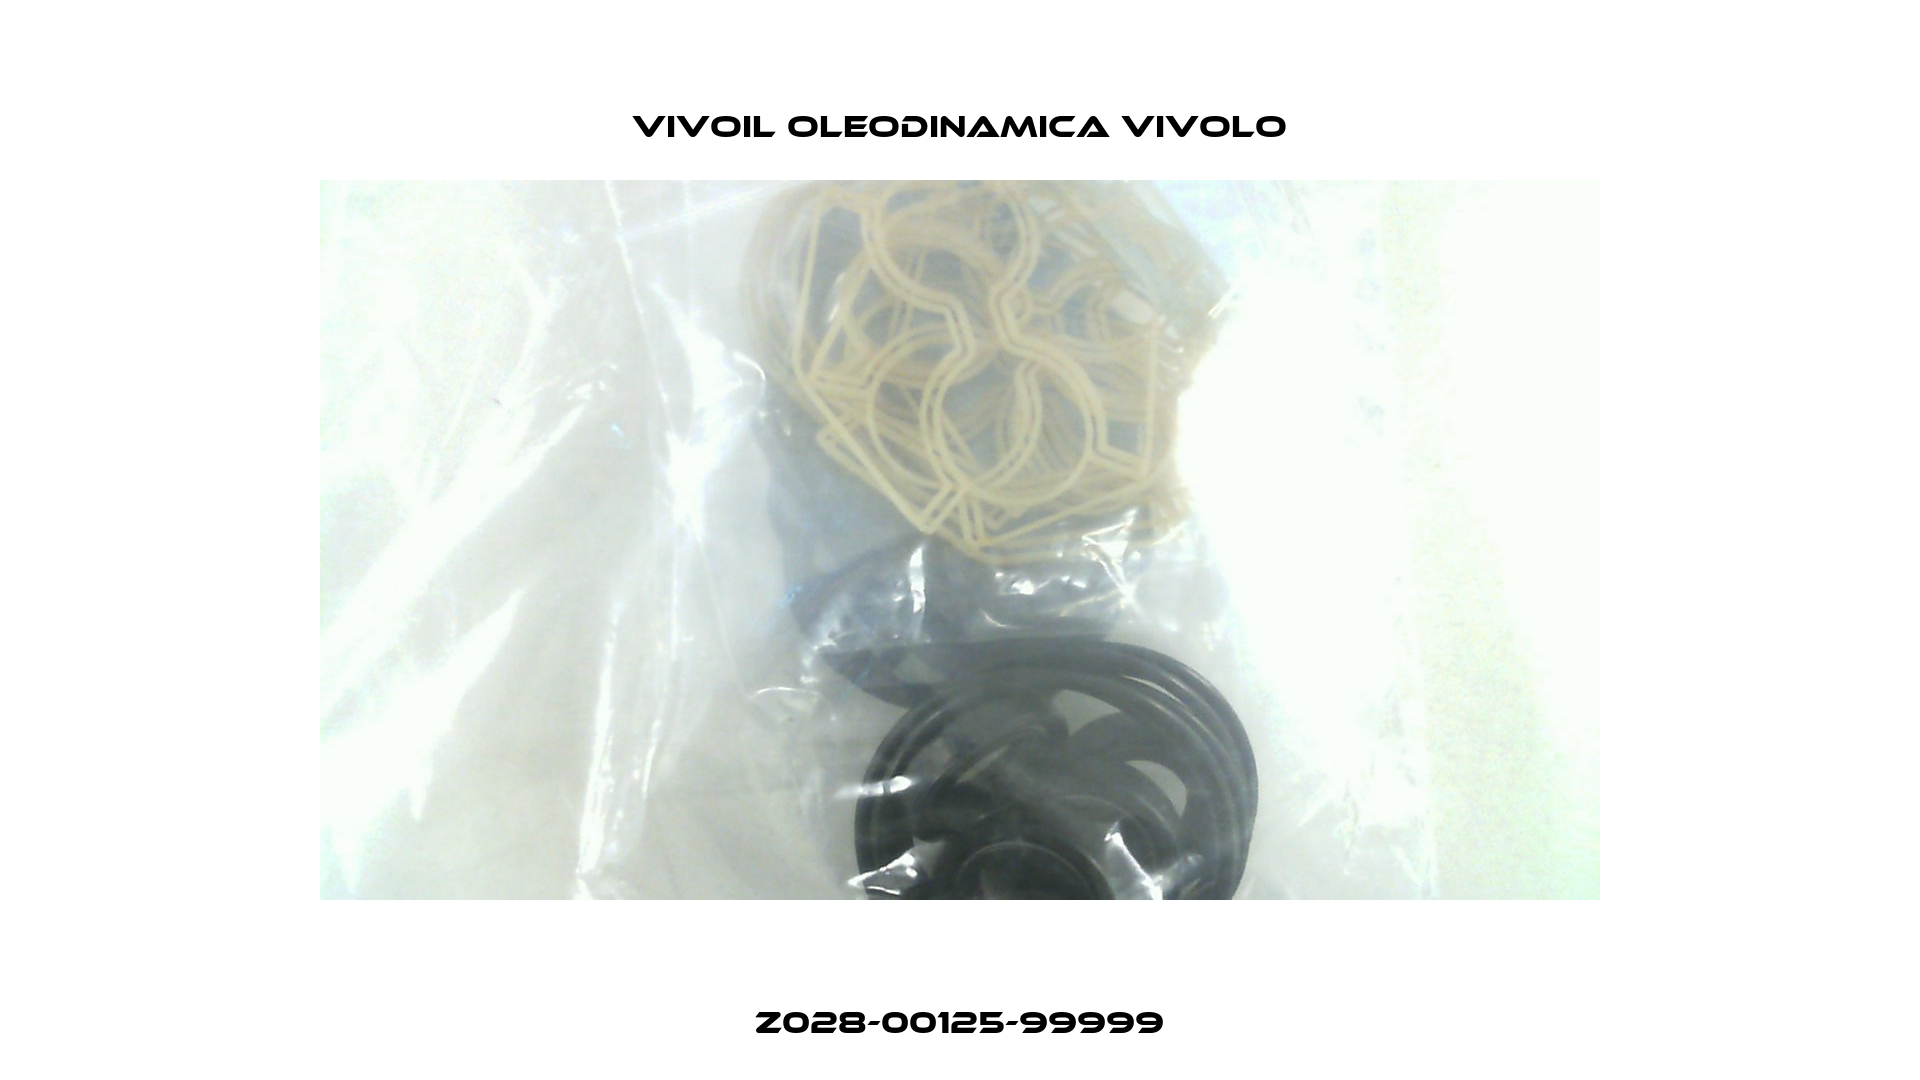 Z028-00125-99999 Vivoil Oleodinamica Vivolo